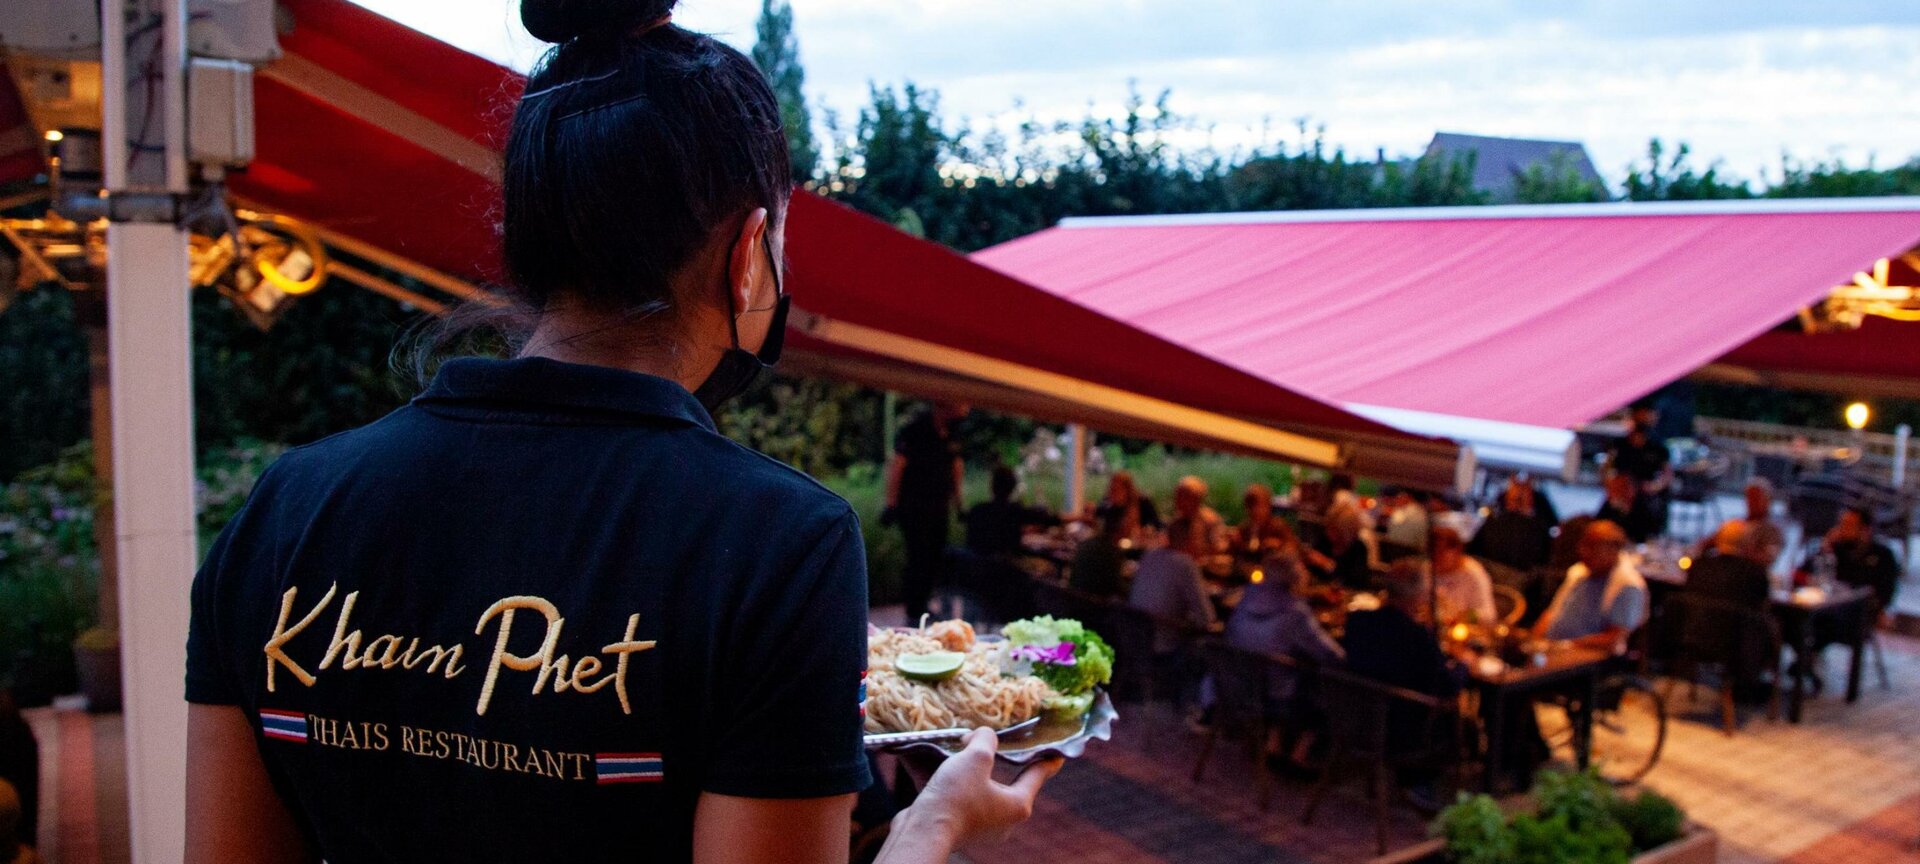 Thais Restaurant Khamphet - Het prachtig privé tuinterras met 70 zitplaatsen